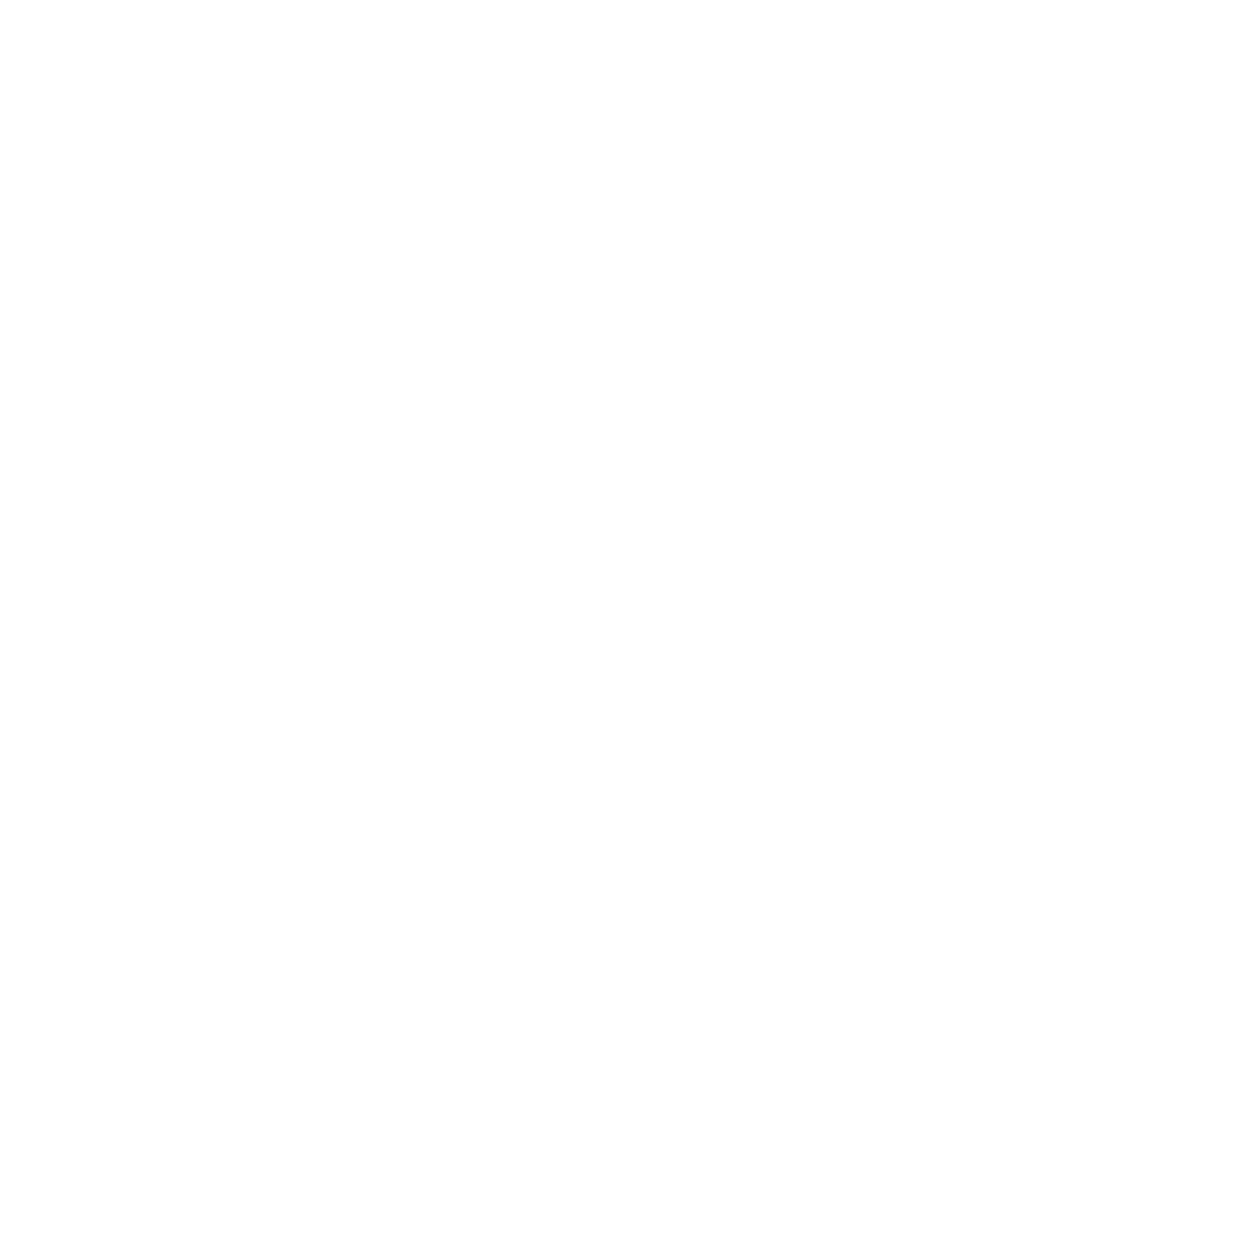 Great Kei Adventures | Tour Operator | Shuttles & Transfers